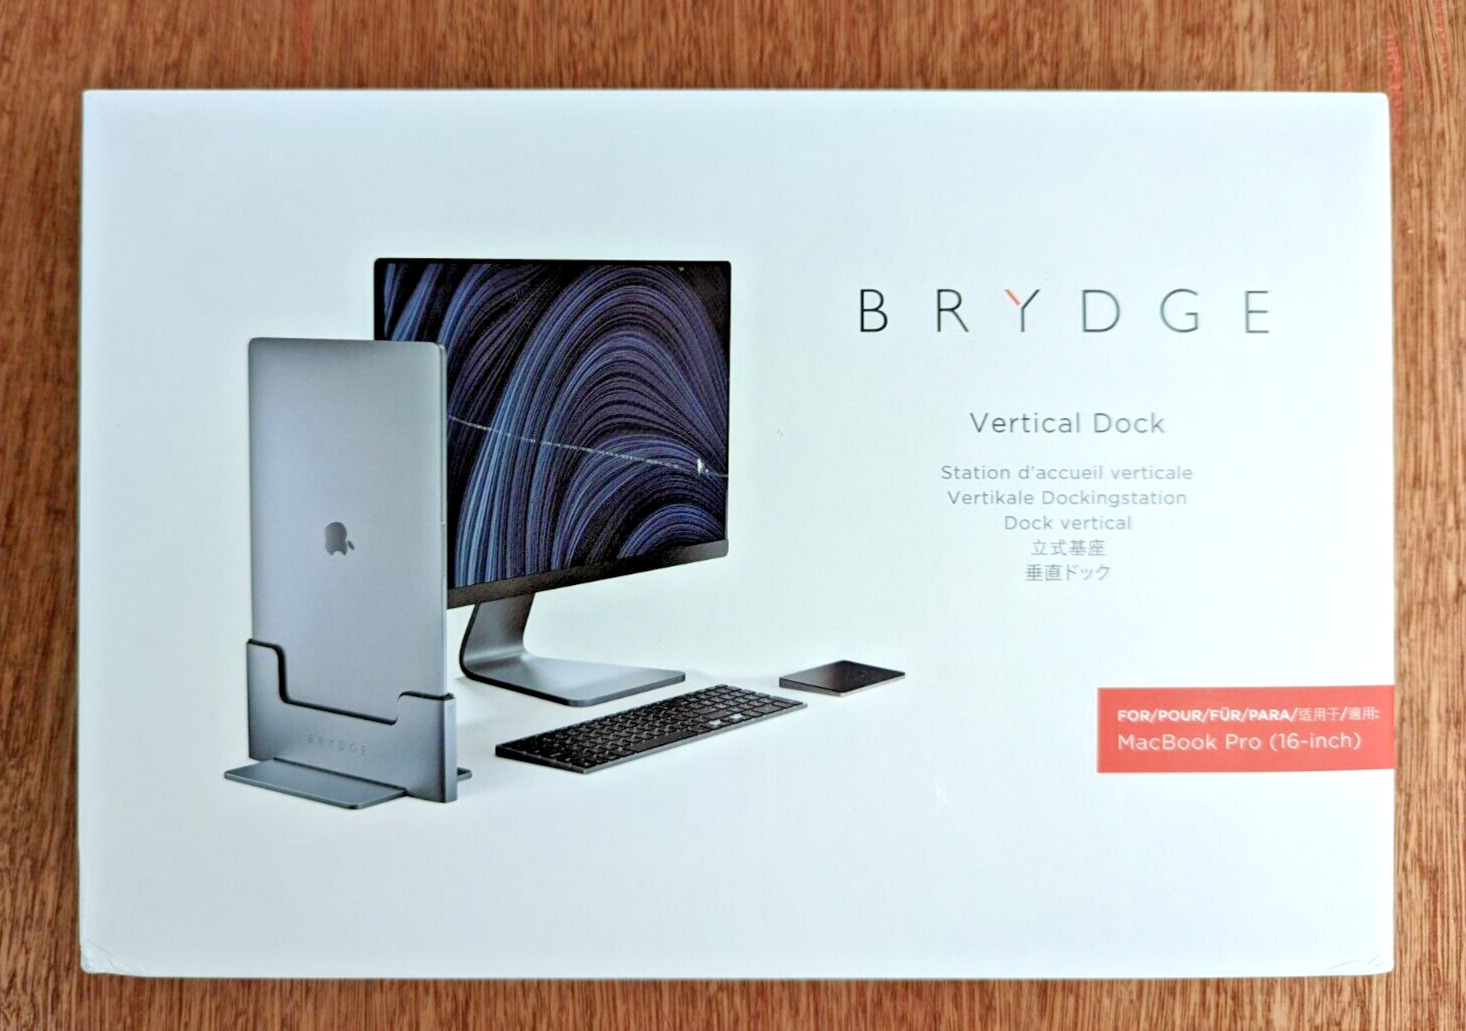 Brydge BRY16MBP Vertical Dock MacBook Pro 16inch